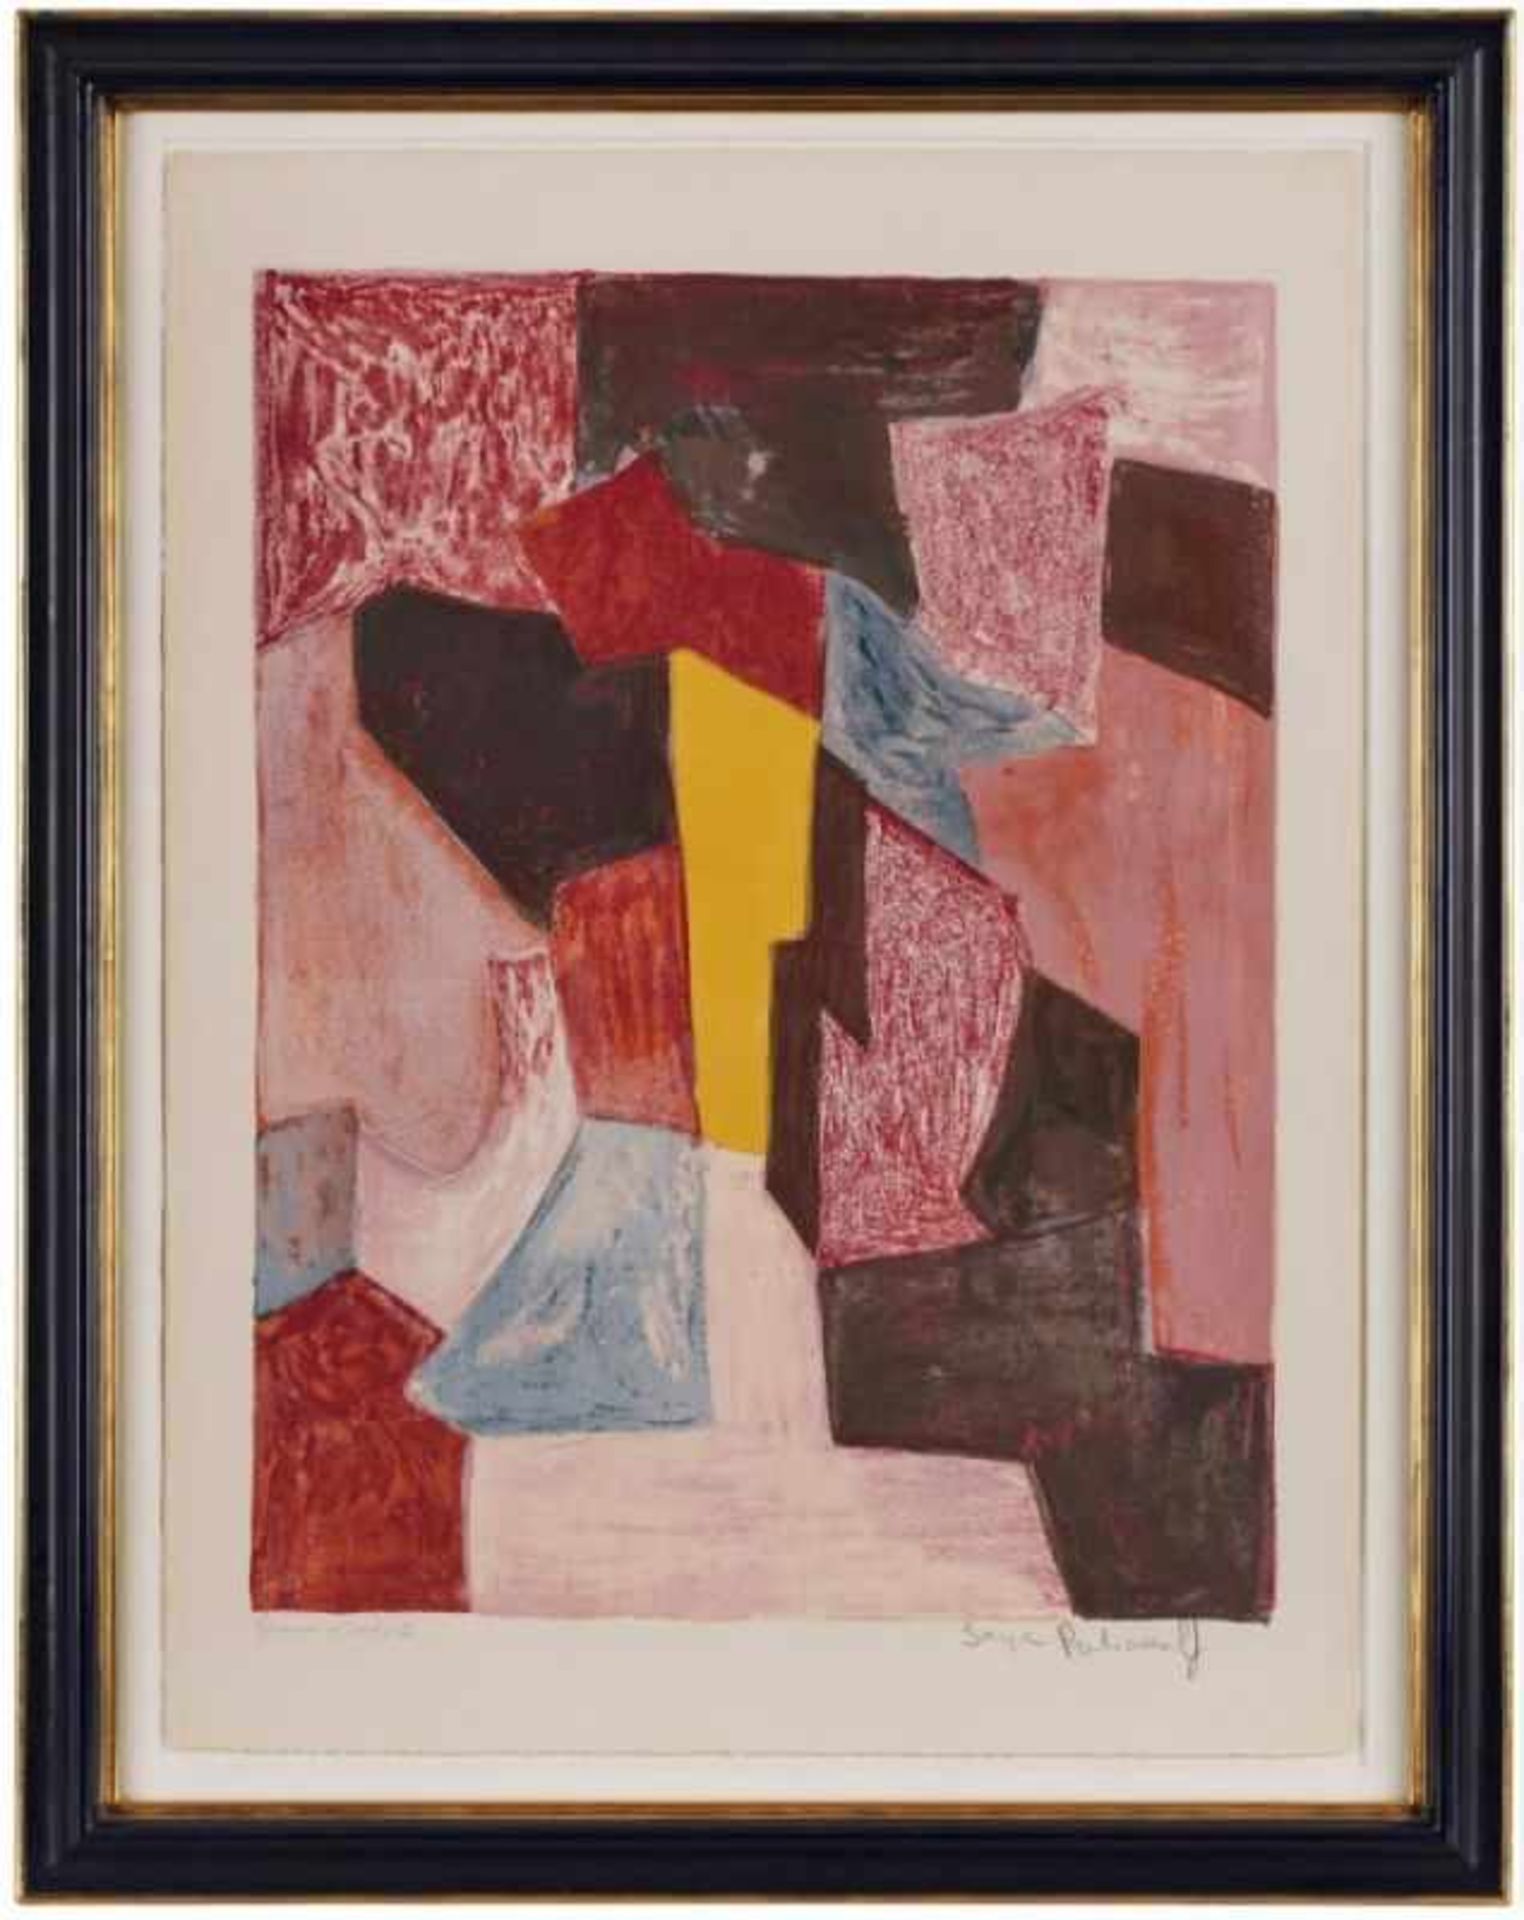 Lithographie Serge Poliakoff1900 Moskau - 1969 Paris "Komposition in Rot, Karminrot und Gelb" 1958